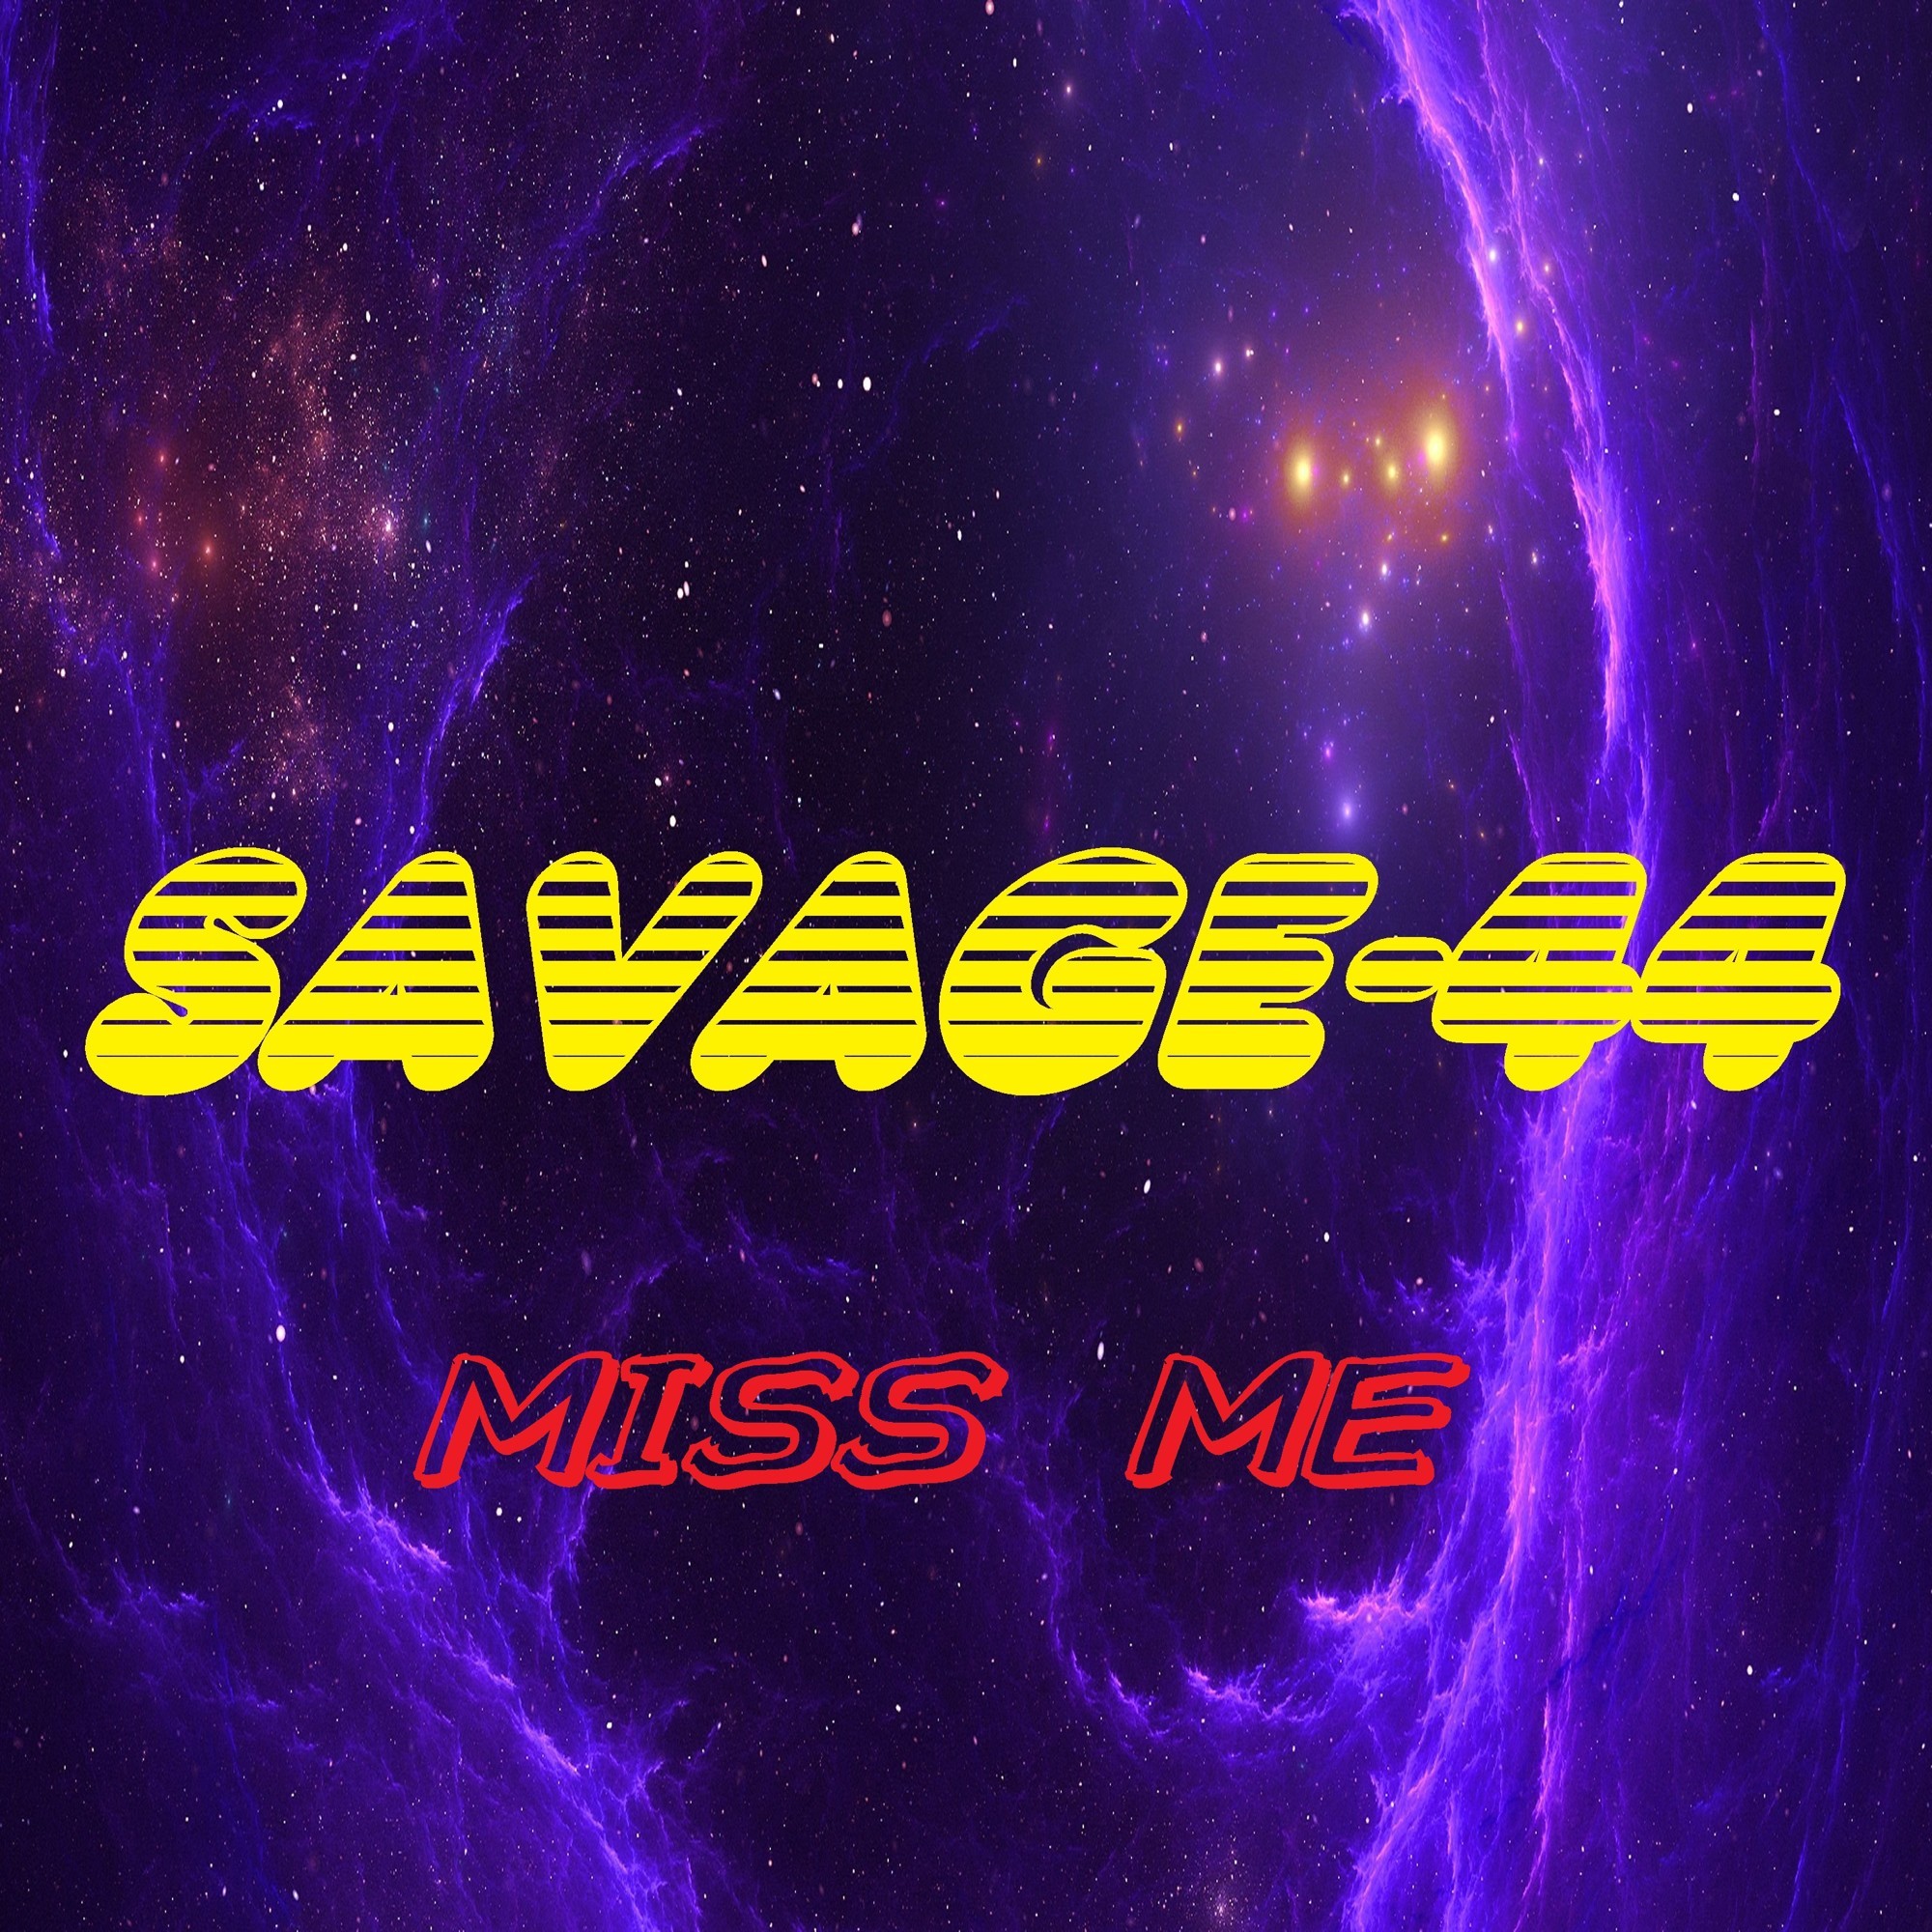 Саваж ремикс слушать. Savage 44. DJ Savage 44. Savage-44 слушать. Альбом Miss.